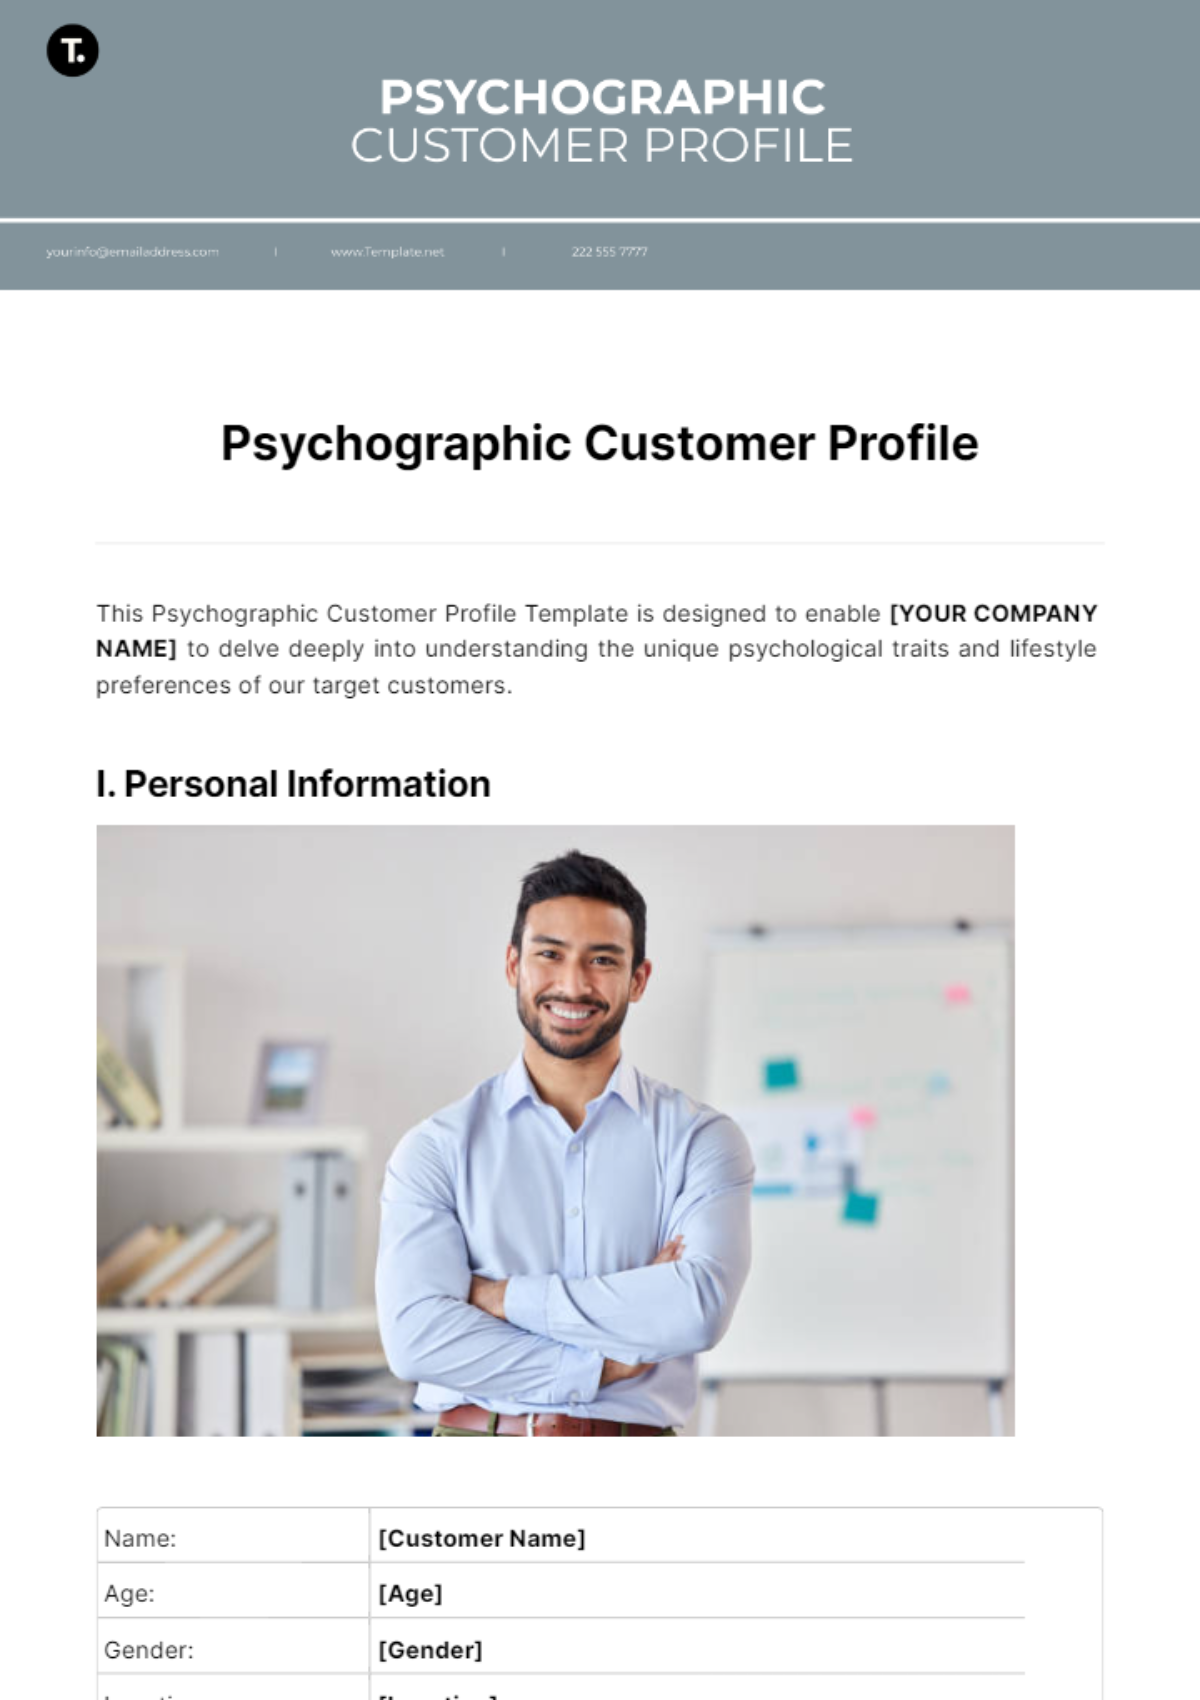 Psychographic Customer Profile Template